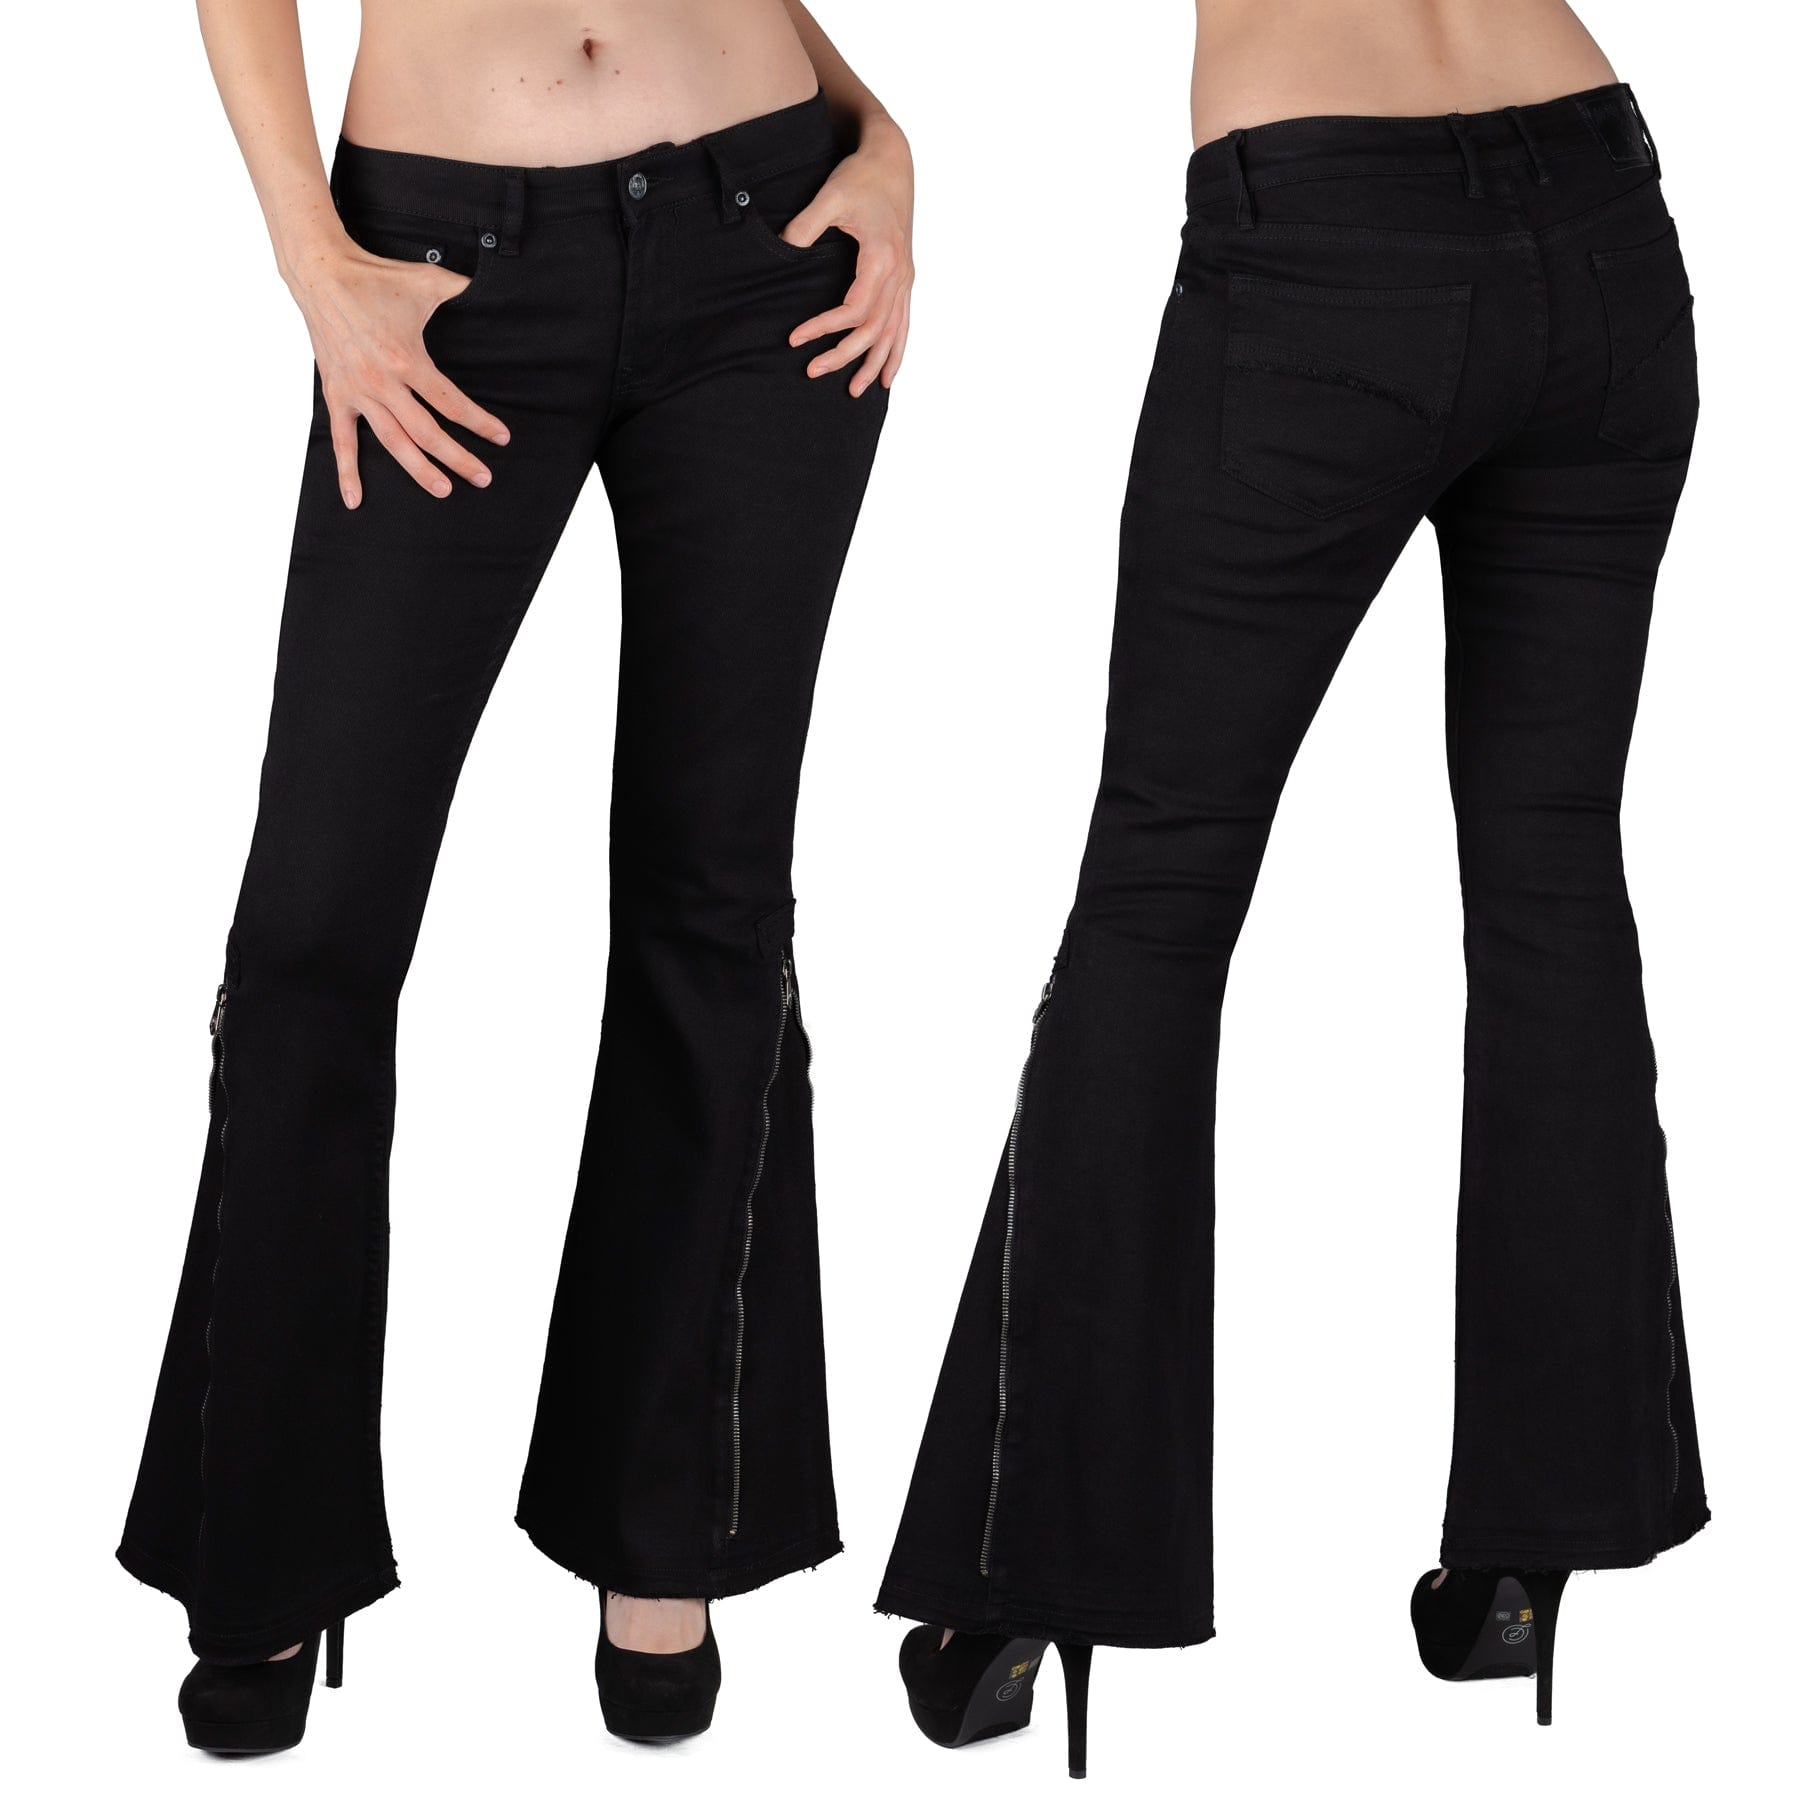 Wornstar Clothing Hellraiser Side Zipper Unisex Jeans - Black